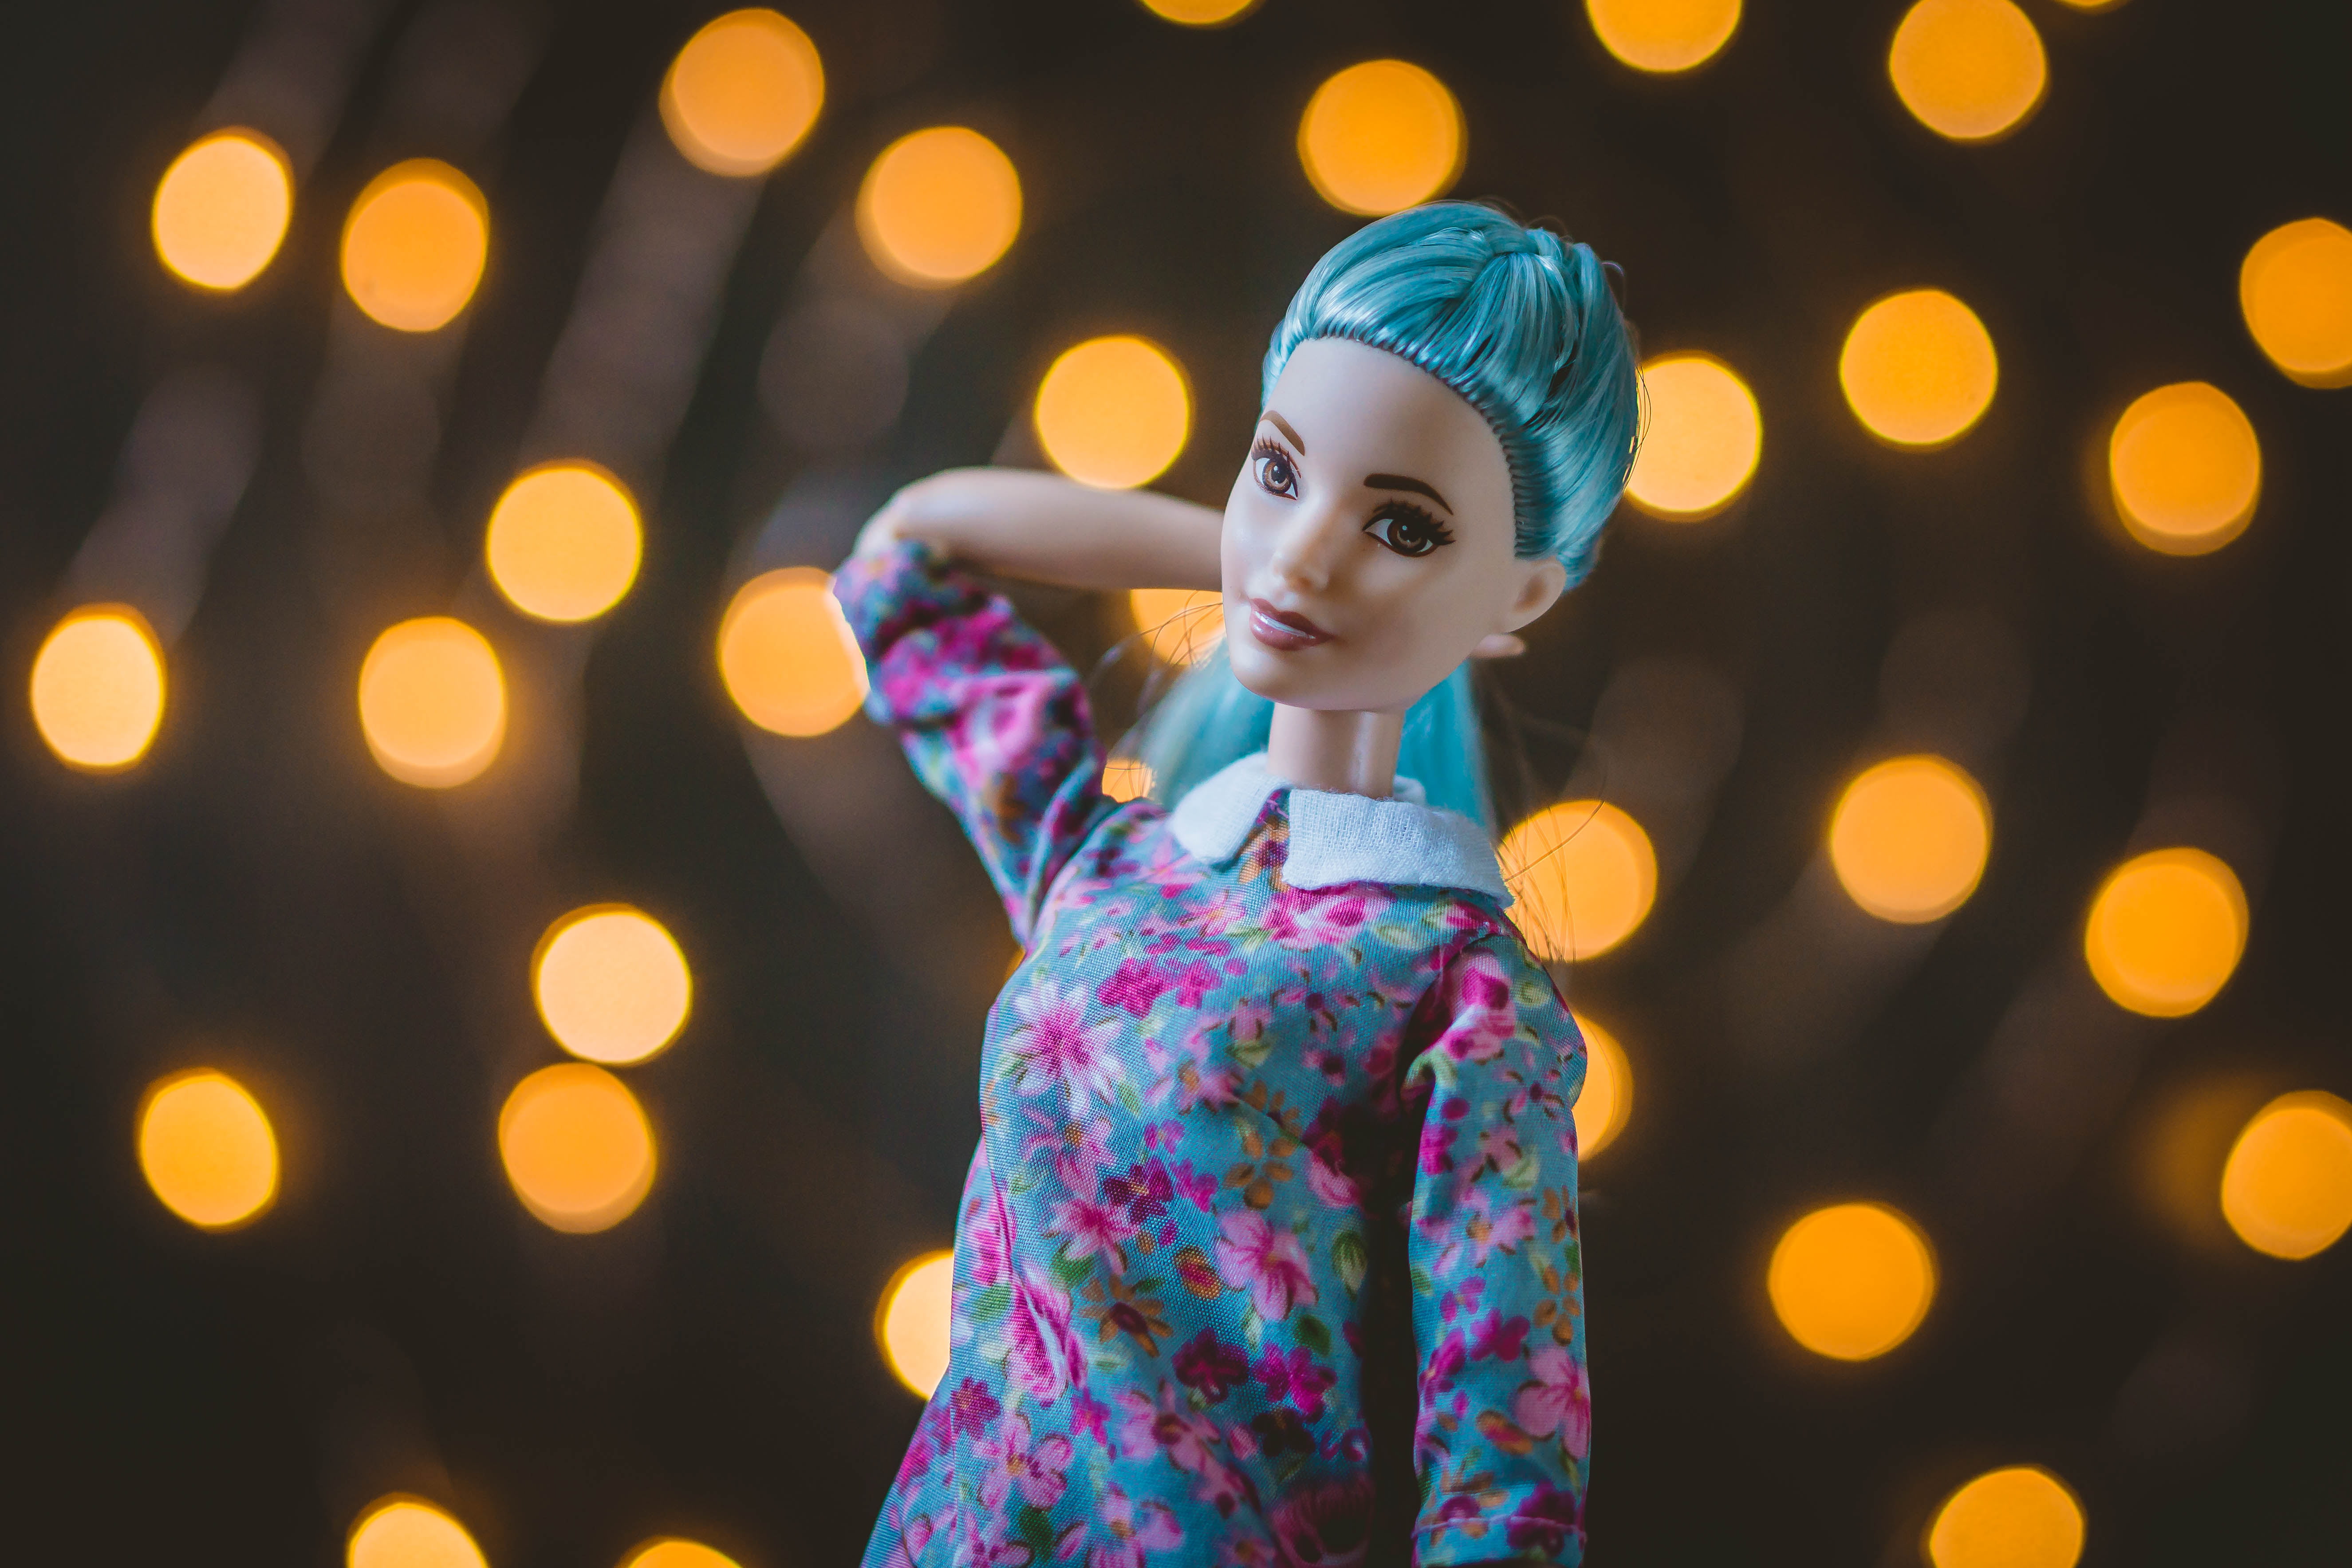 doll, barbie, style, fashion, glare, one person, illuminated